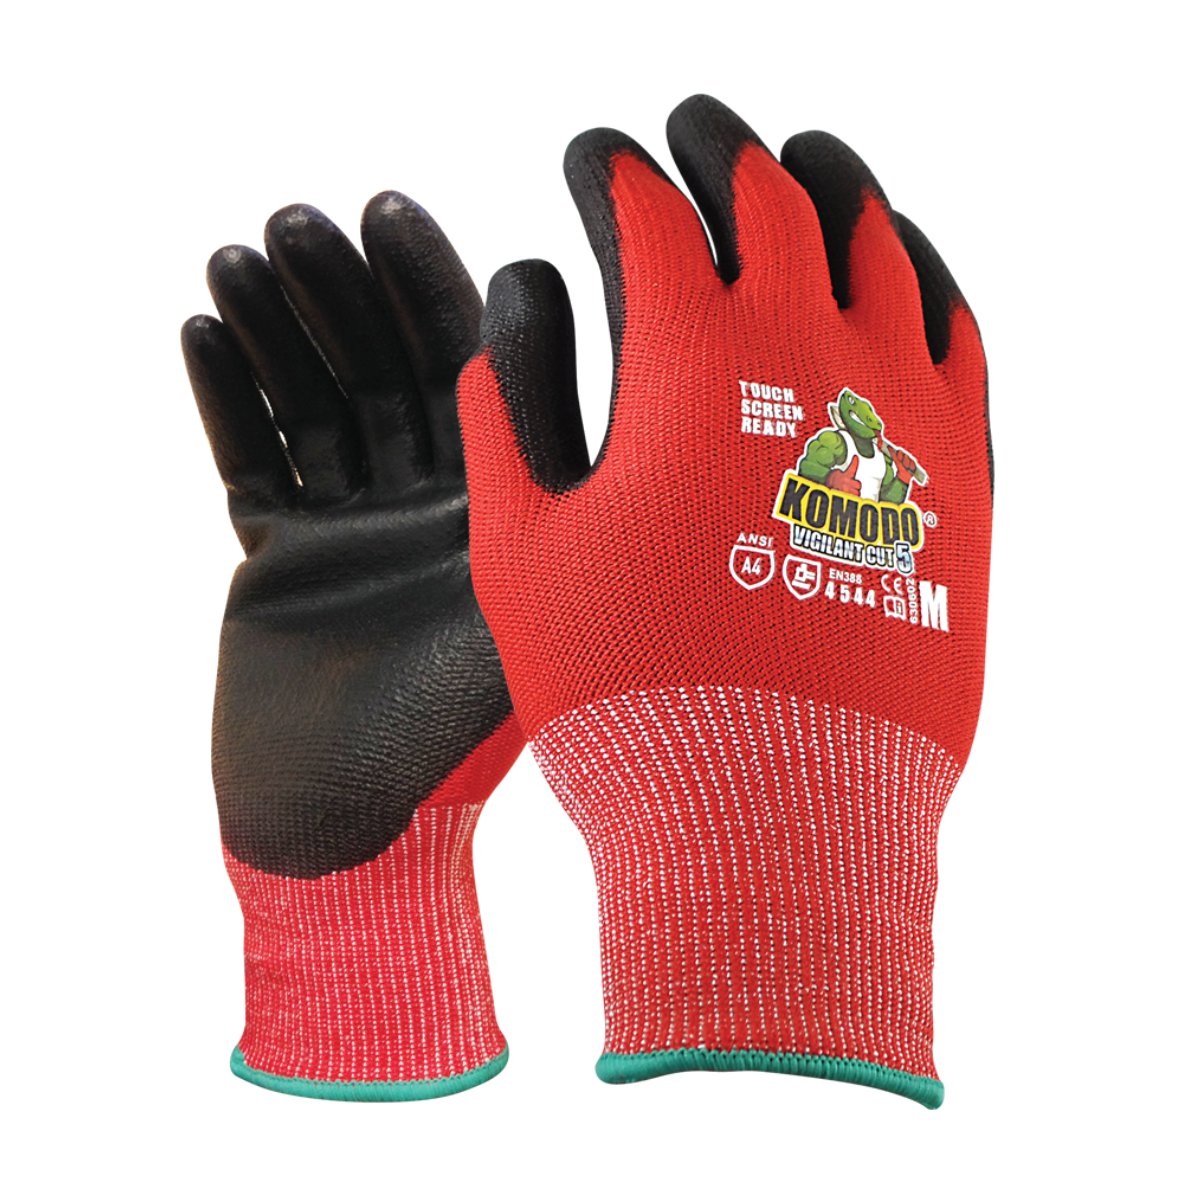 TGC KOMODO® Vigilant® Cut 5 Gloves 63060 (Pack of 12)